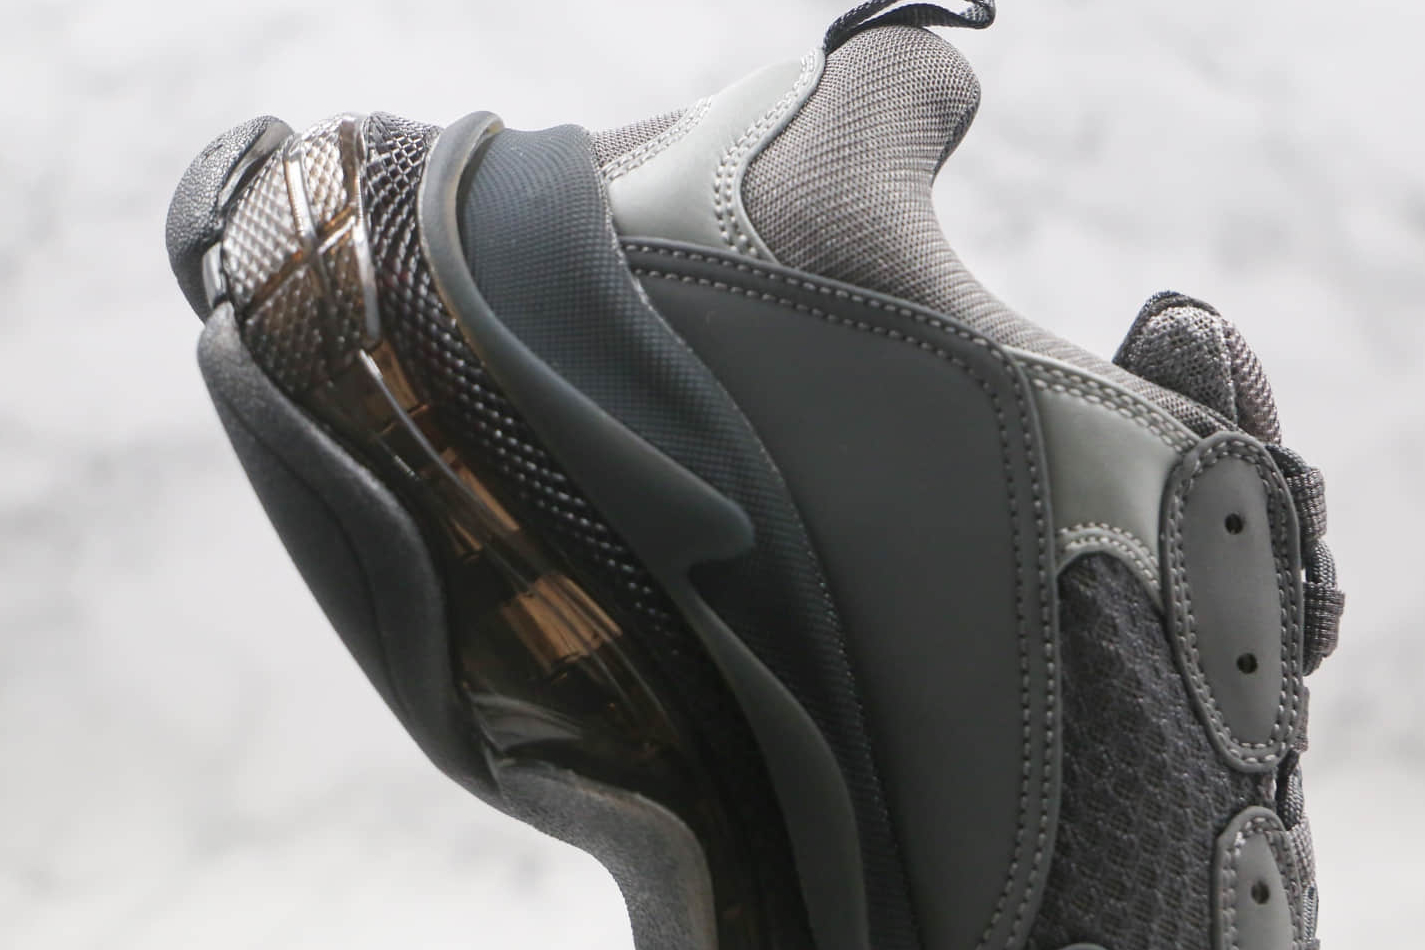 Balenciaga Triple S Sneaker Clear Sole - Dark Grey | 541624W2GA11801